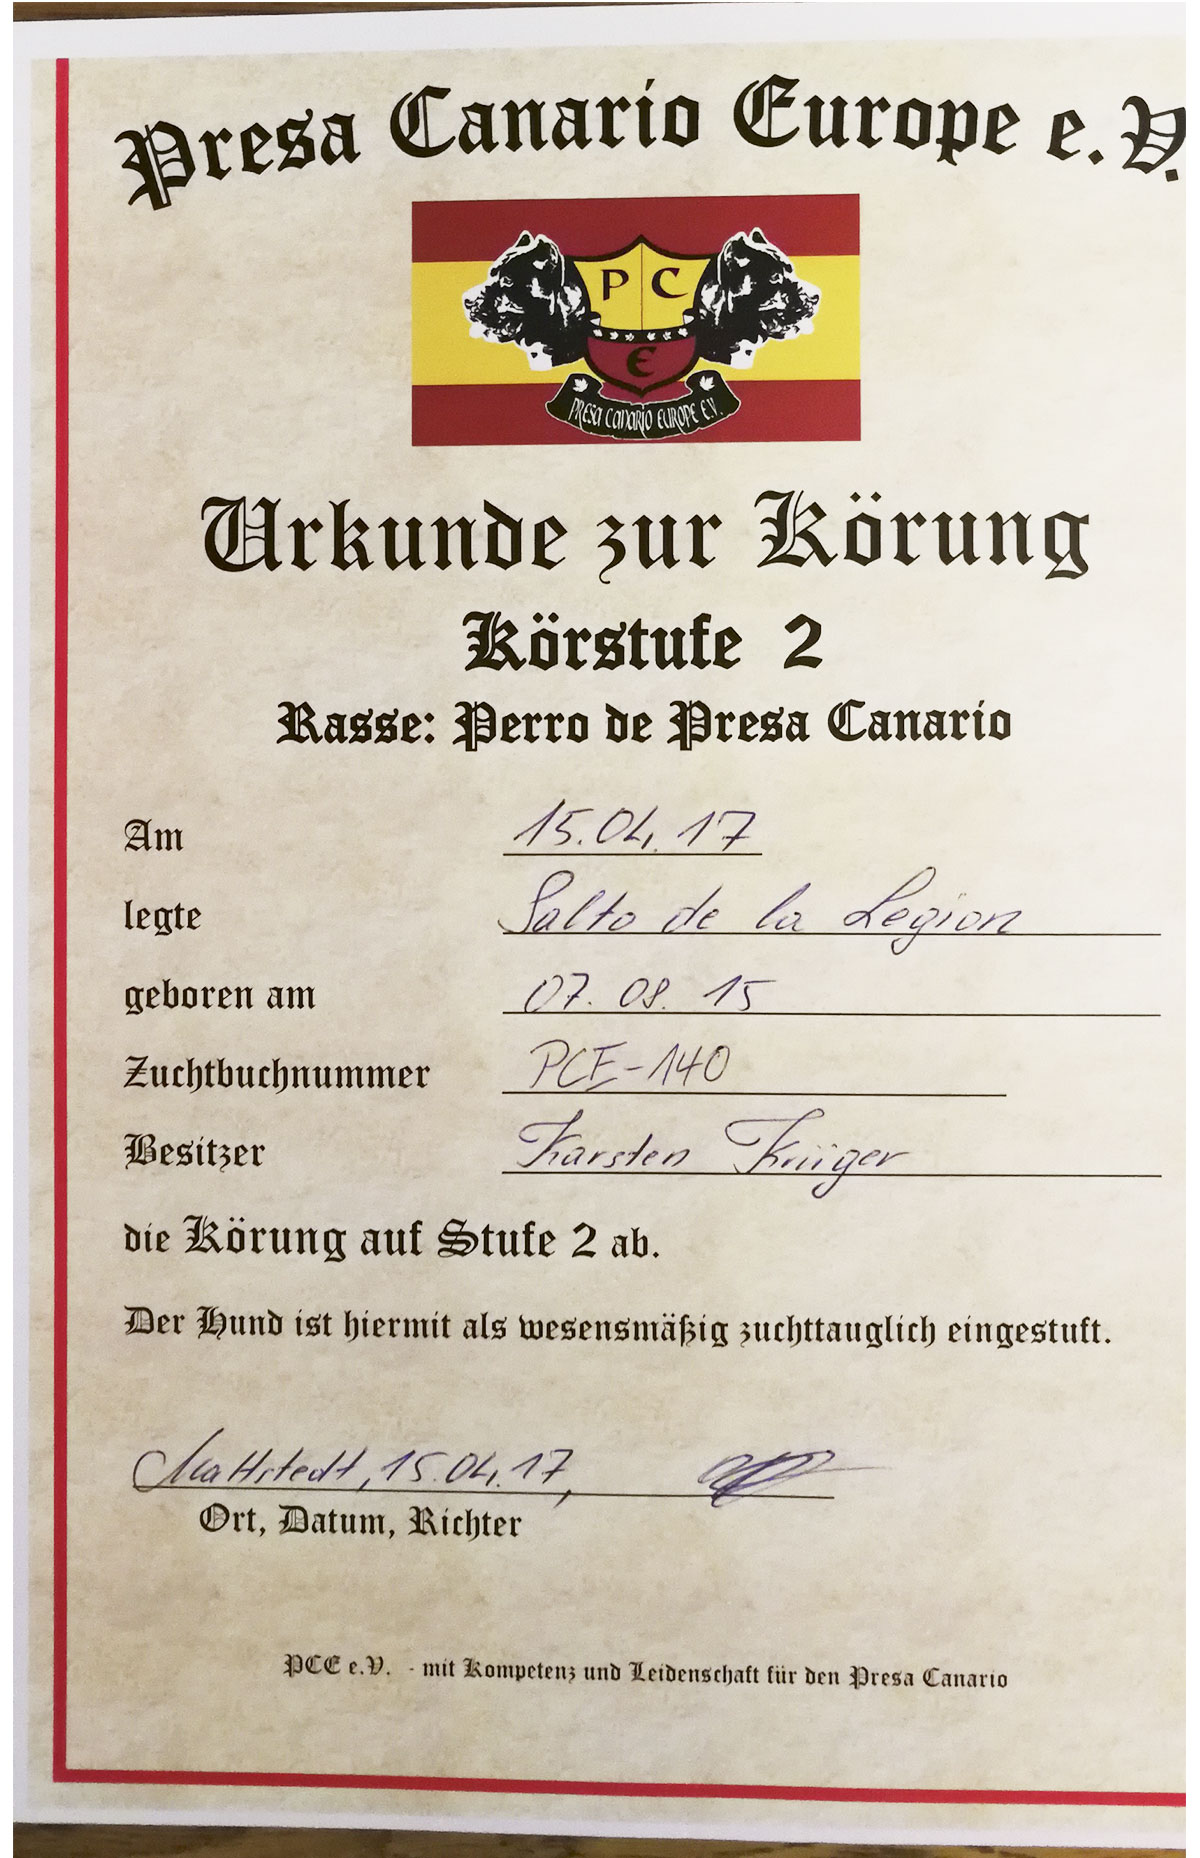 Salto de la Legion - Urkunde Krönung 2